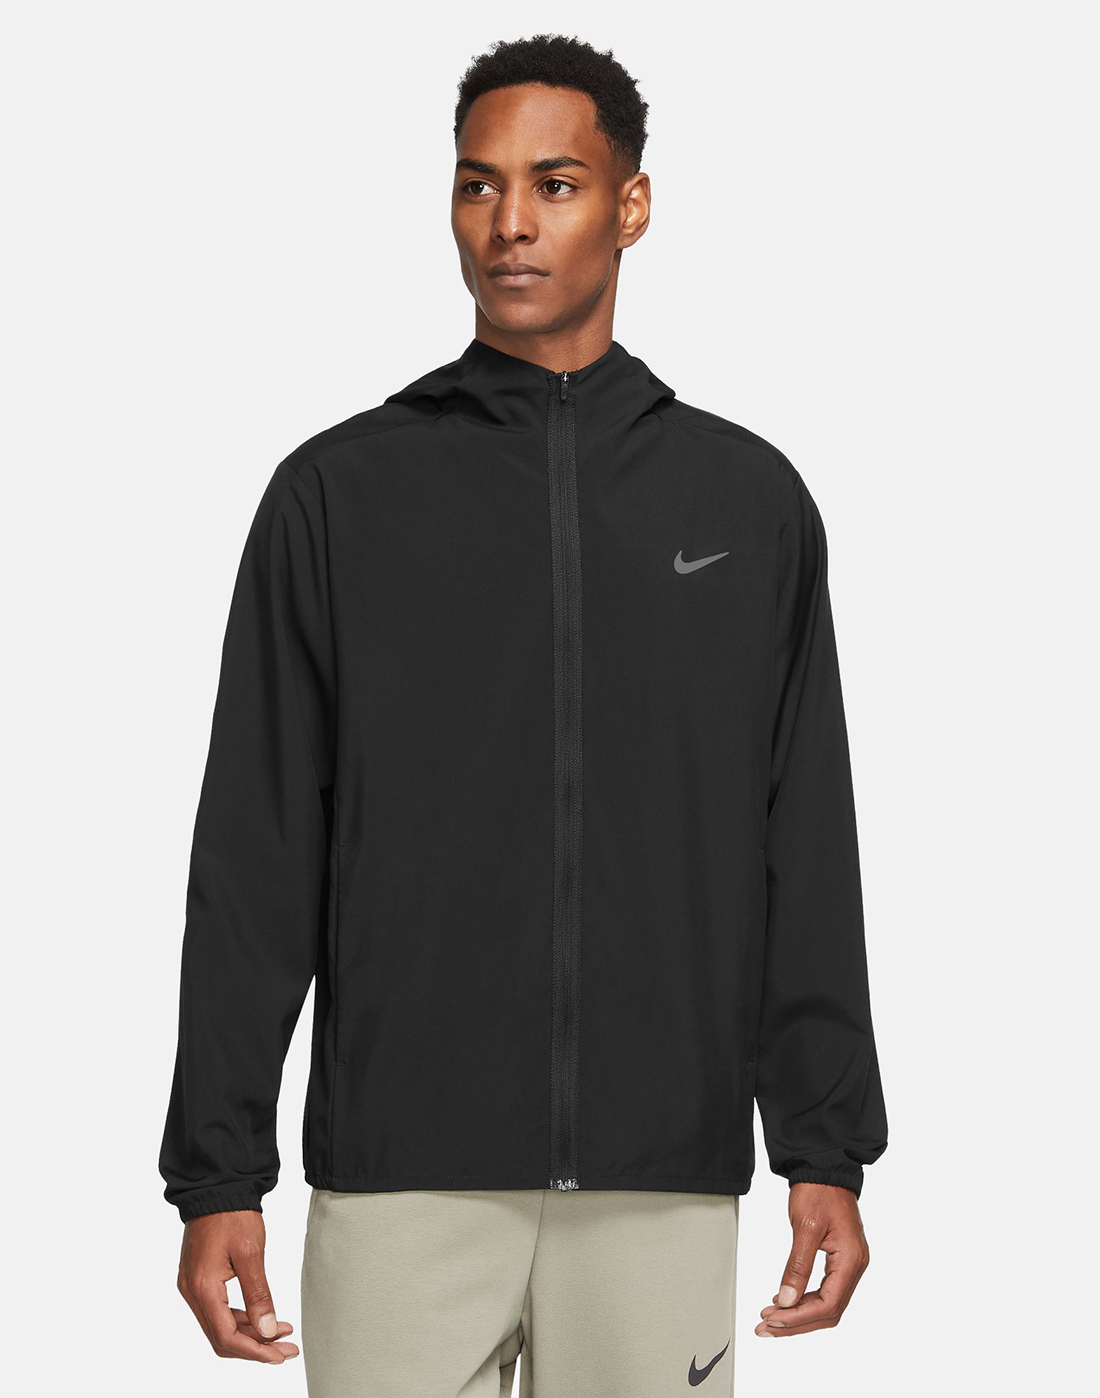 Nike Mens Form Train Woven Full Zip Jacket - Black | Life Style Sports UK